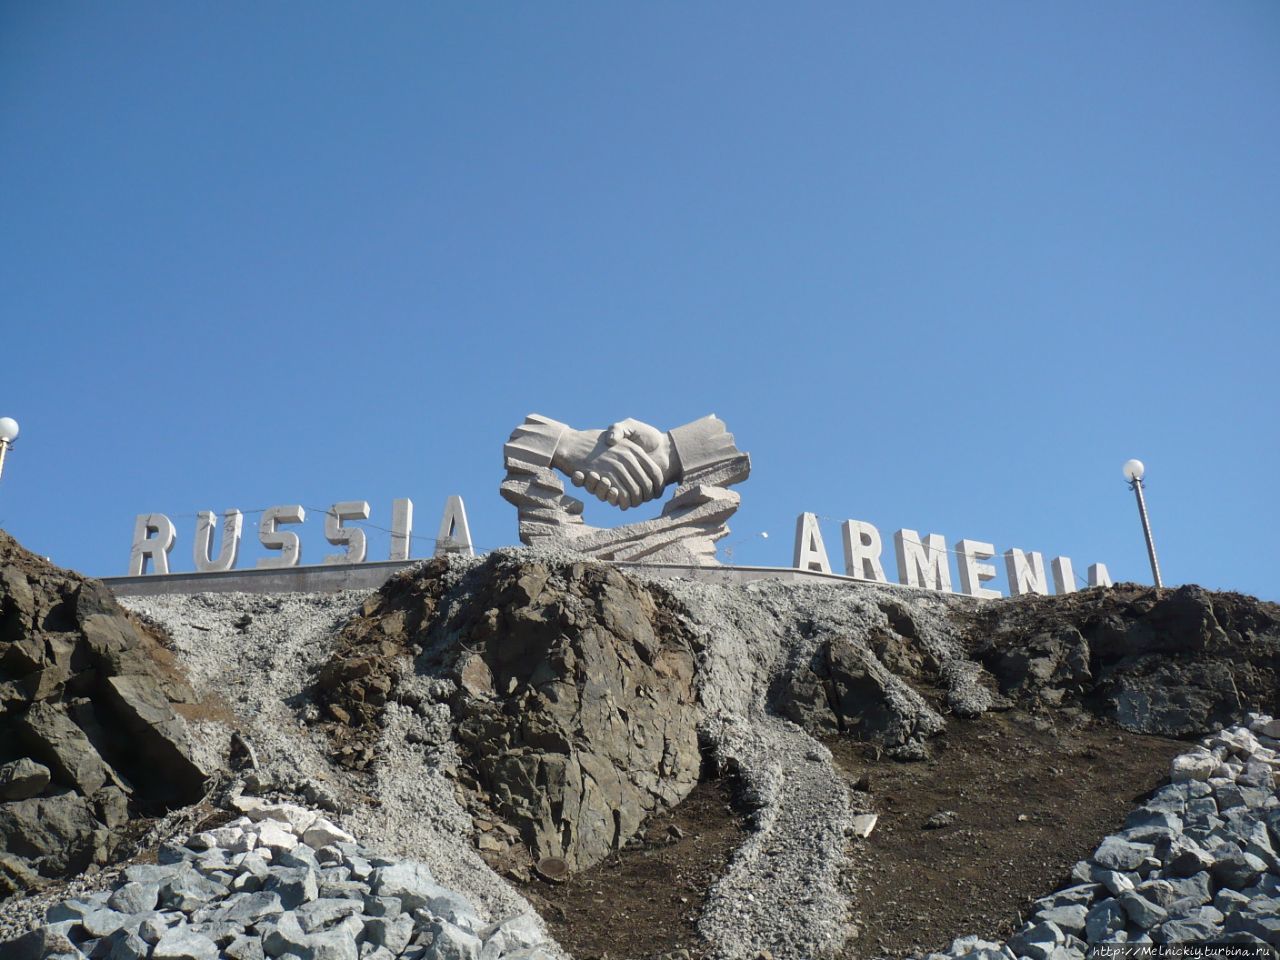 Сквер дружбы Армении и России / Friendship Square of Armenia and Russia